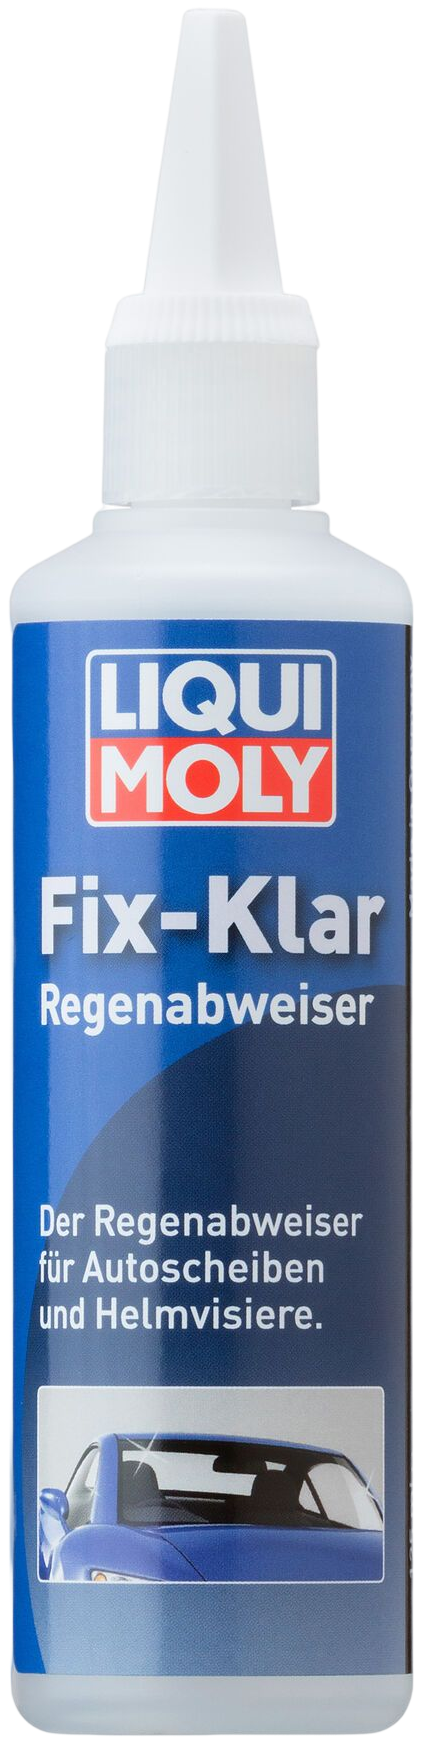 Liqui Moly Fix-Klar antiregen, 12 x 125 ml detail 2